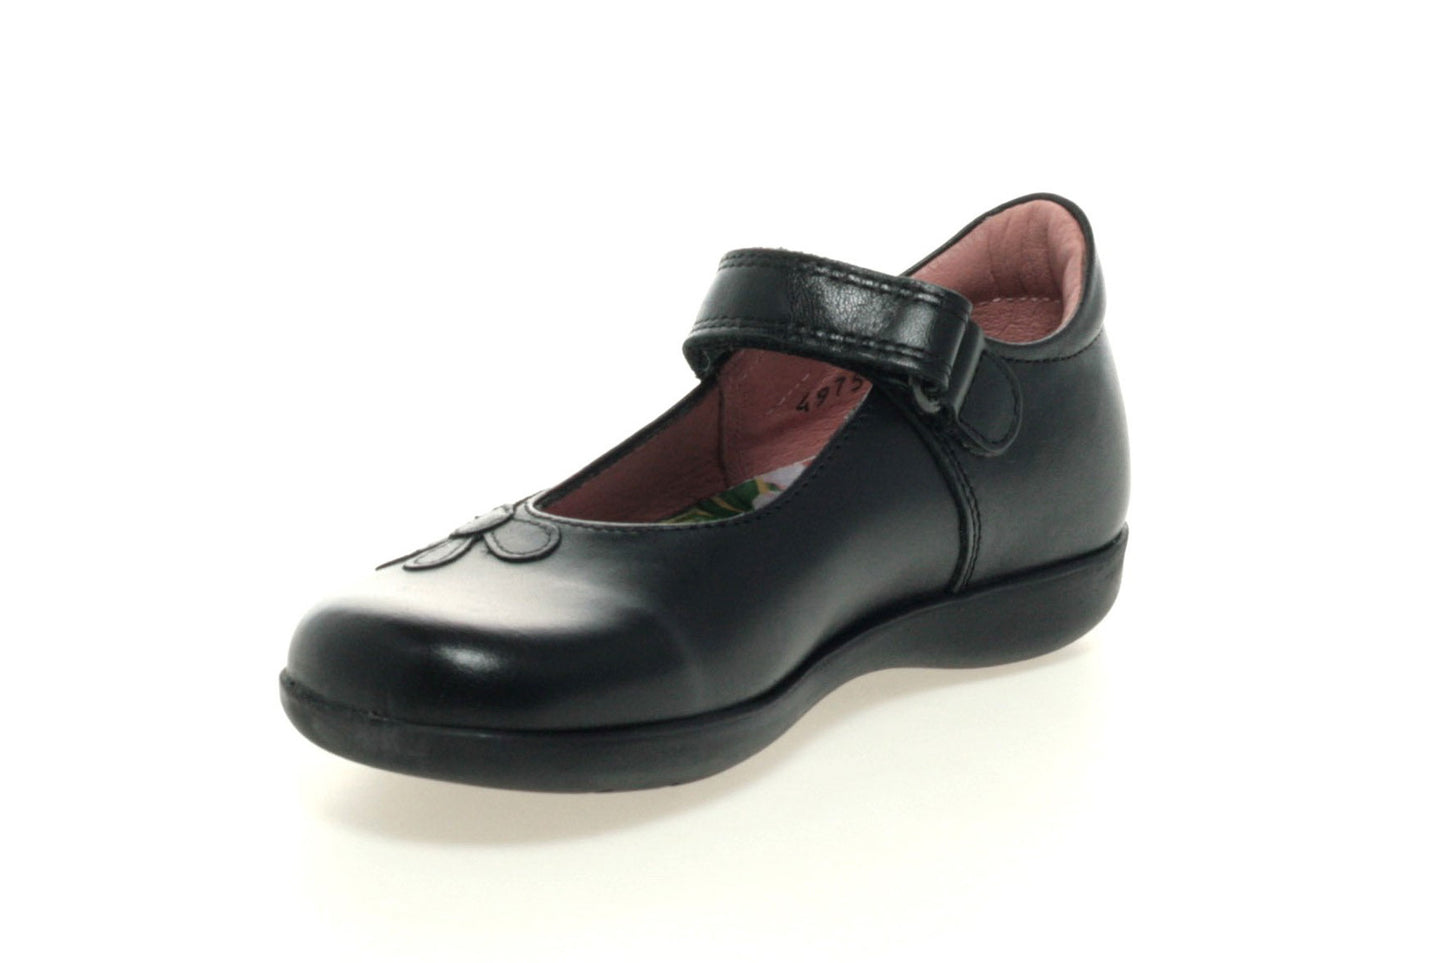 Bonnie Black Leather Mary-Jane Girls School Shoe